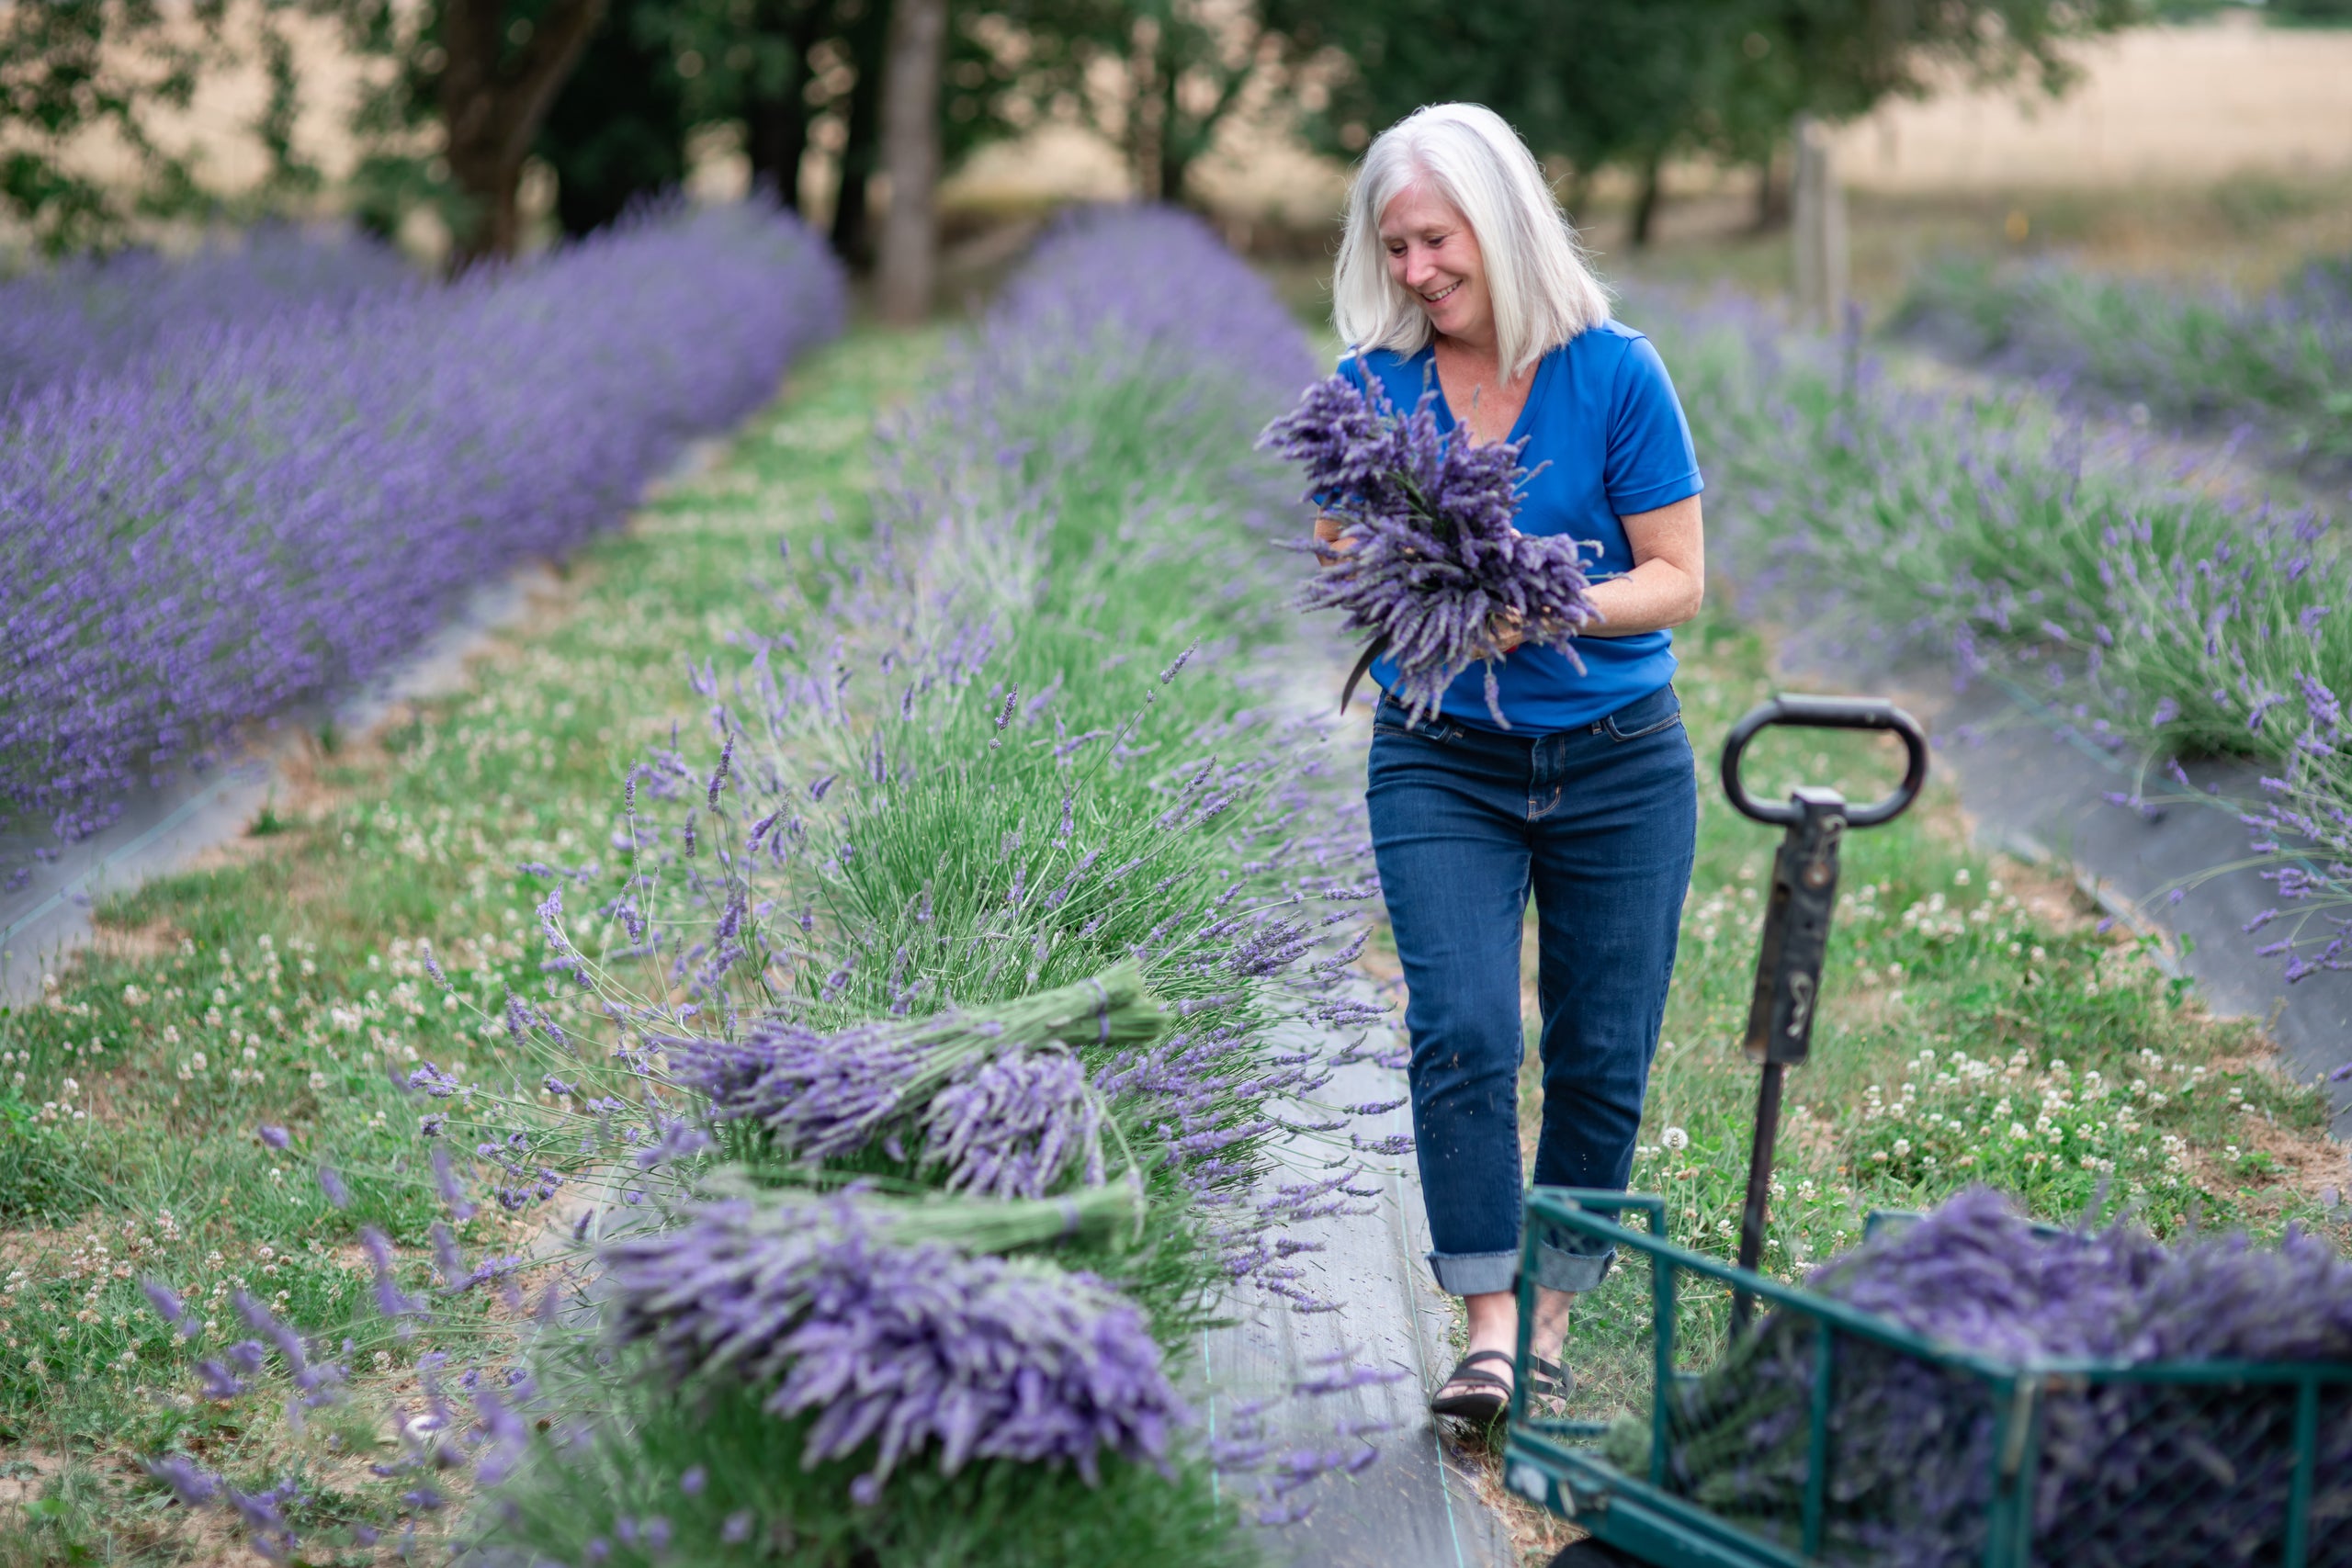 Great Lakes Lavender Farm Dried Lavender Bundle